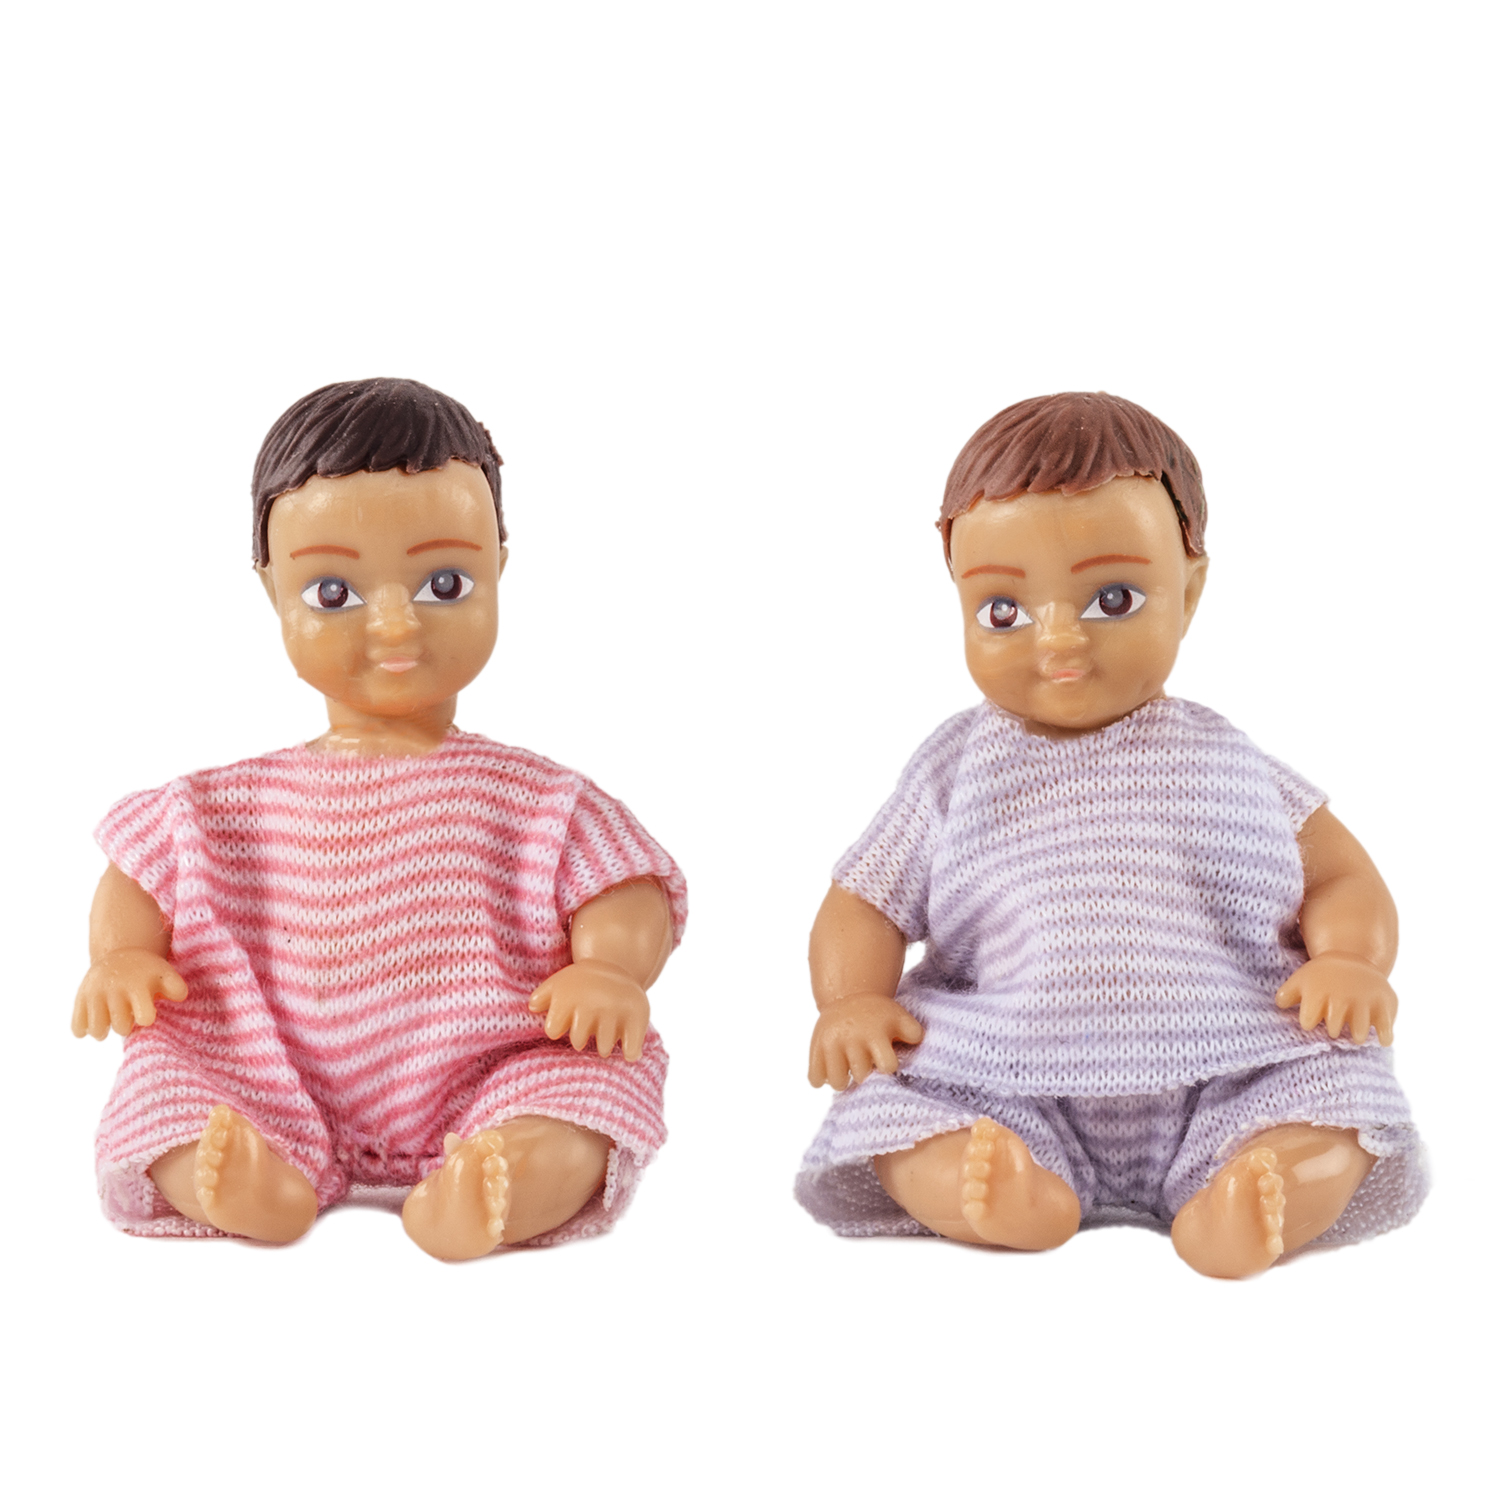 Lundby lundby dukkehusdukker to babyer